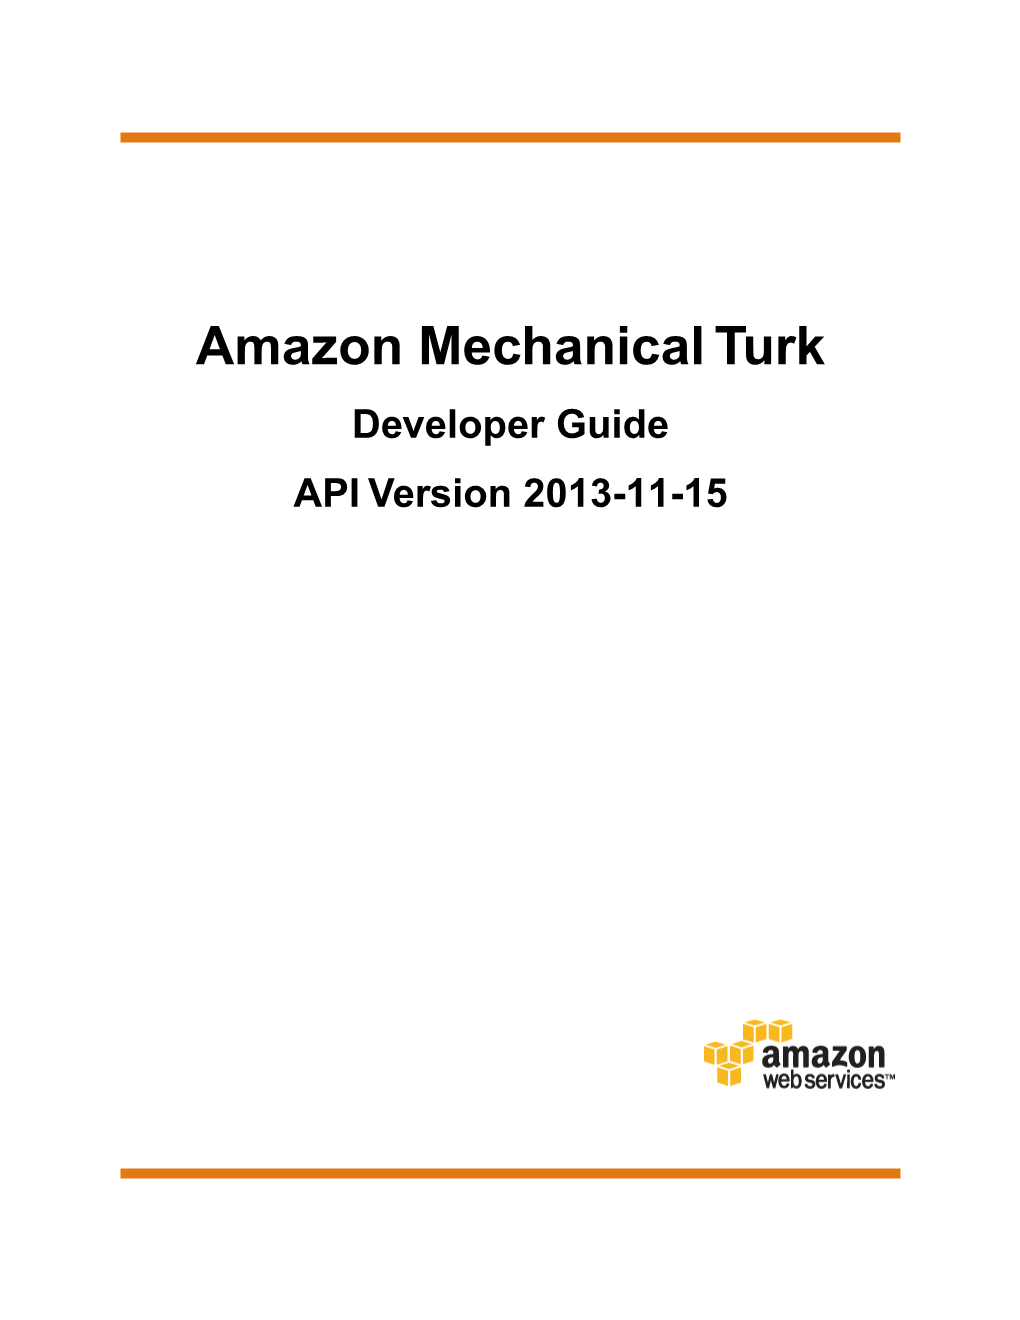 Amazon Mechanical Turk Developer Guide API Version 2013-11-15 Amazon Mechanical Turk Developer Guide